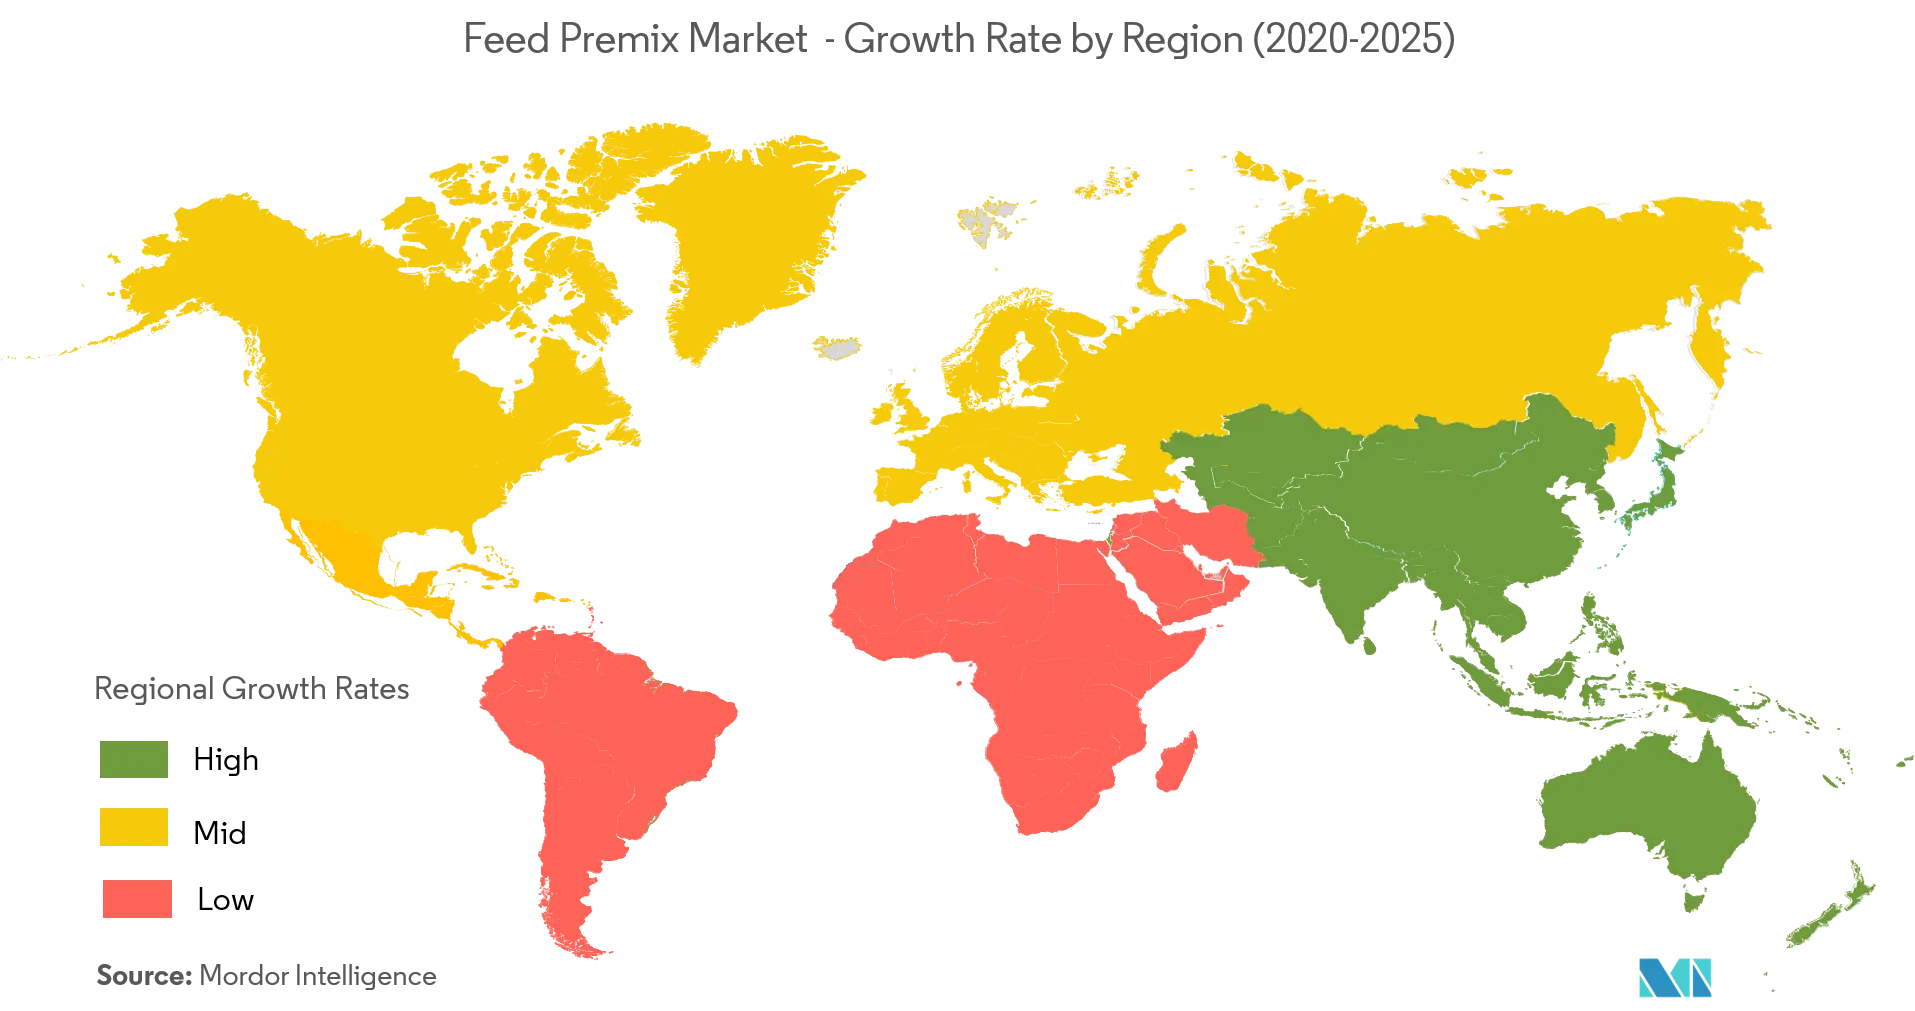  Animal Feed Premix Market Growth